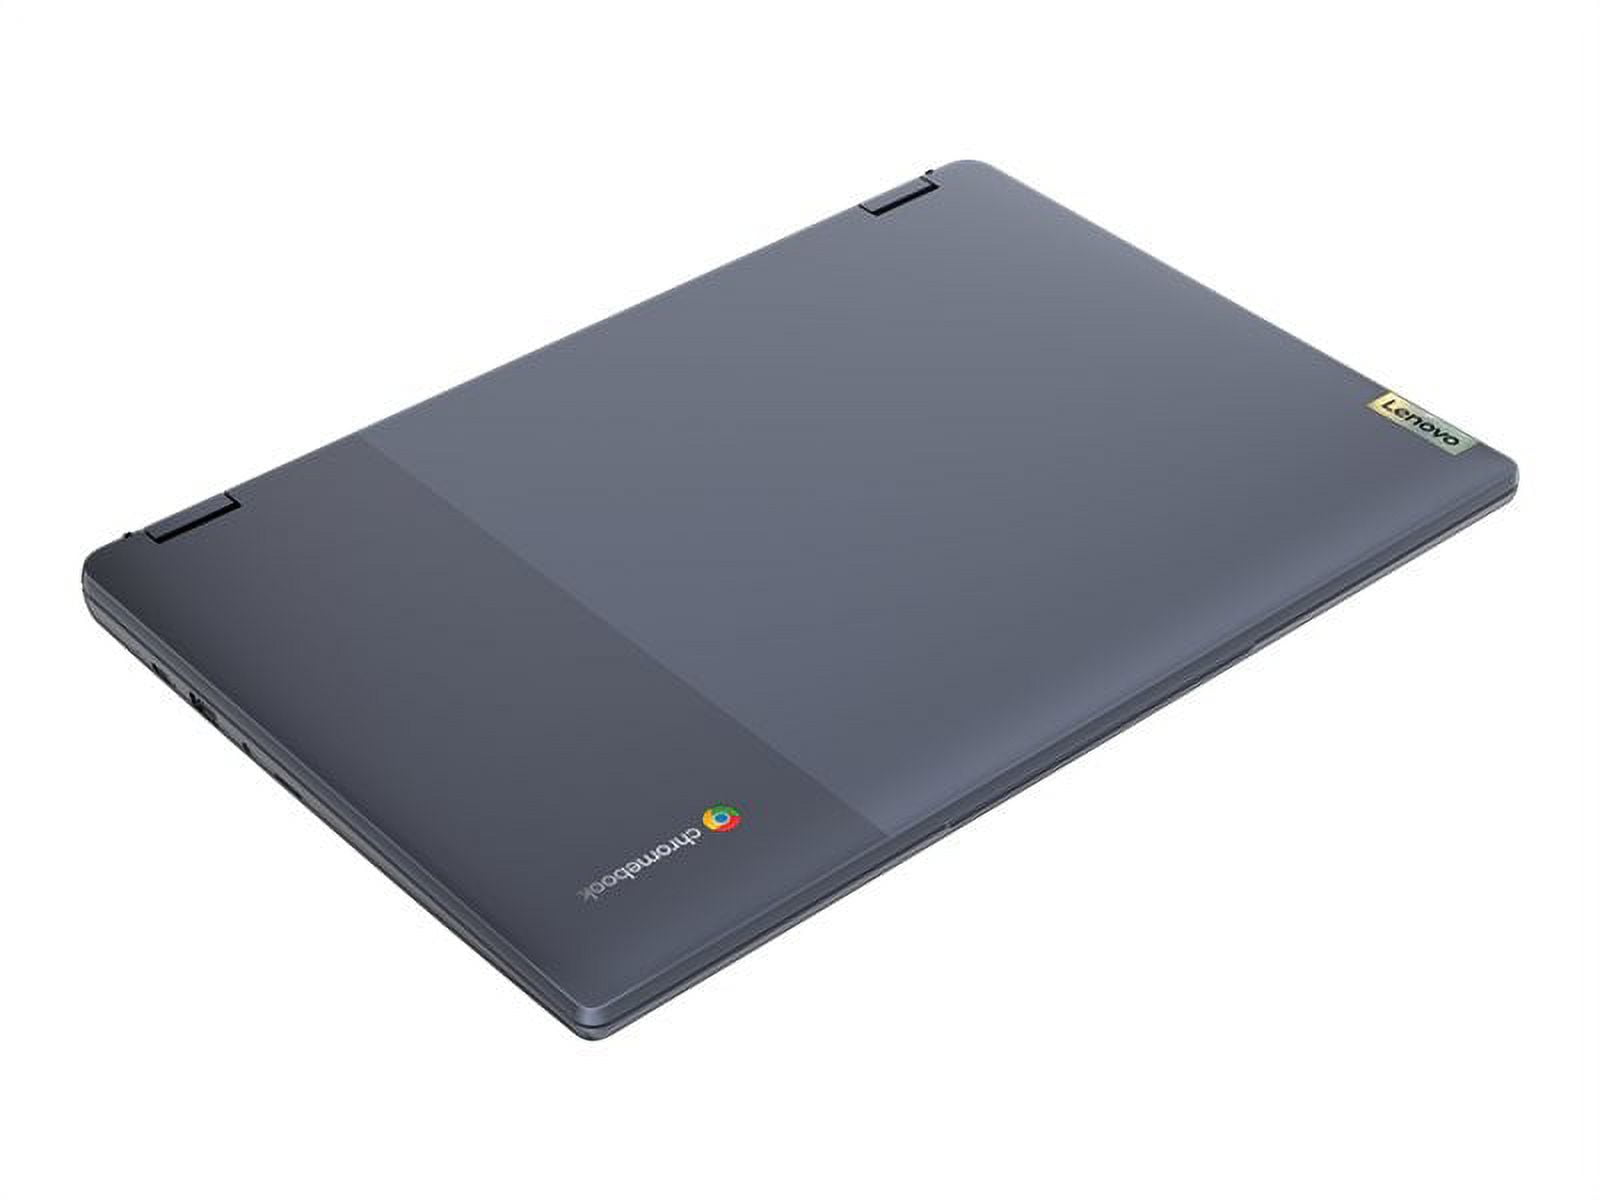  Lenovo Flex 3 Chromebook 2 en 1, Laptop con pantalla táctil  FHD de 15.6 pulgadas, Procesador Intel Pentium N6000, 8 GB de RAM, SSD  de 64 GB